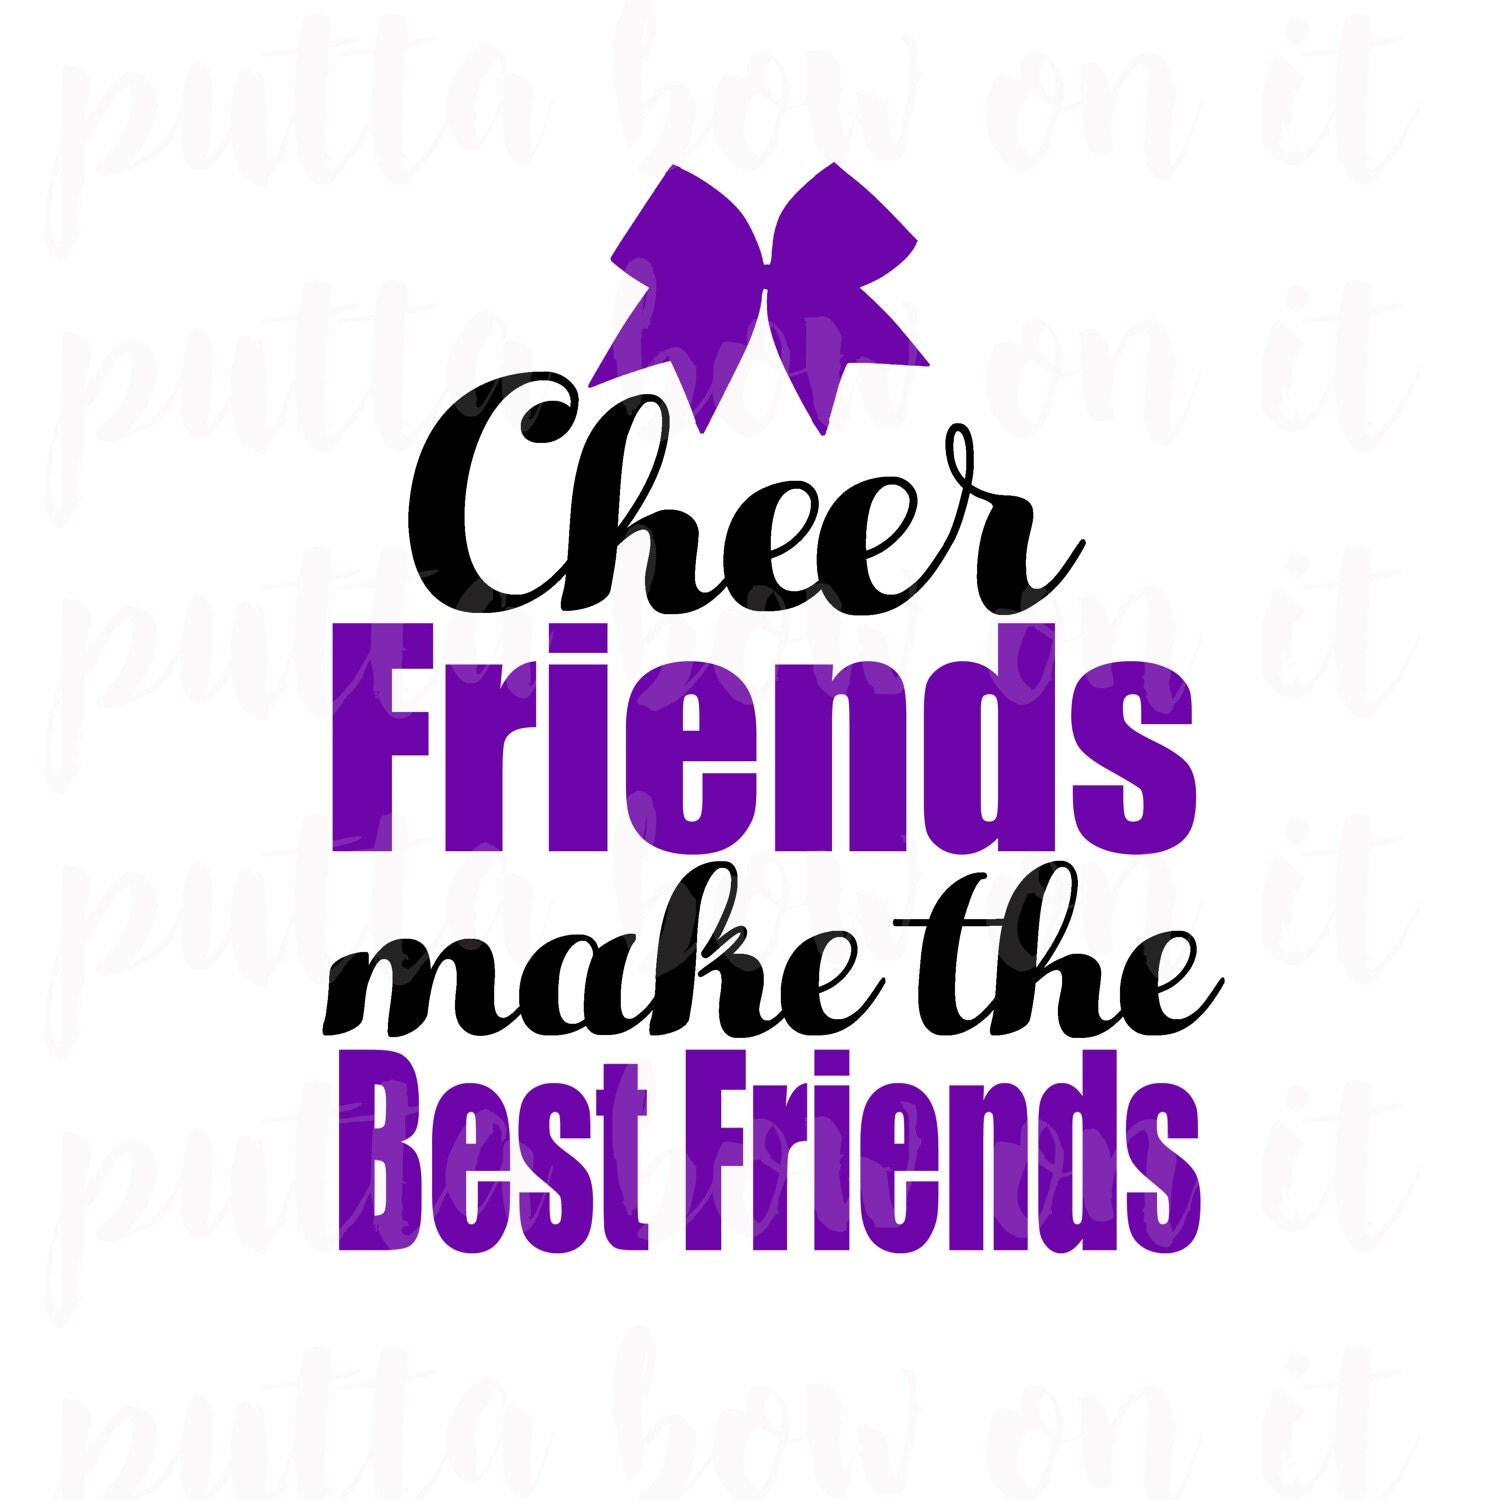 Download Cheer Friends make the Best Friends SVG PNG Cheer Shirt